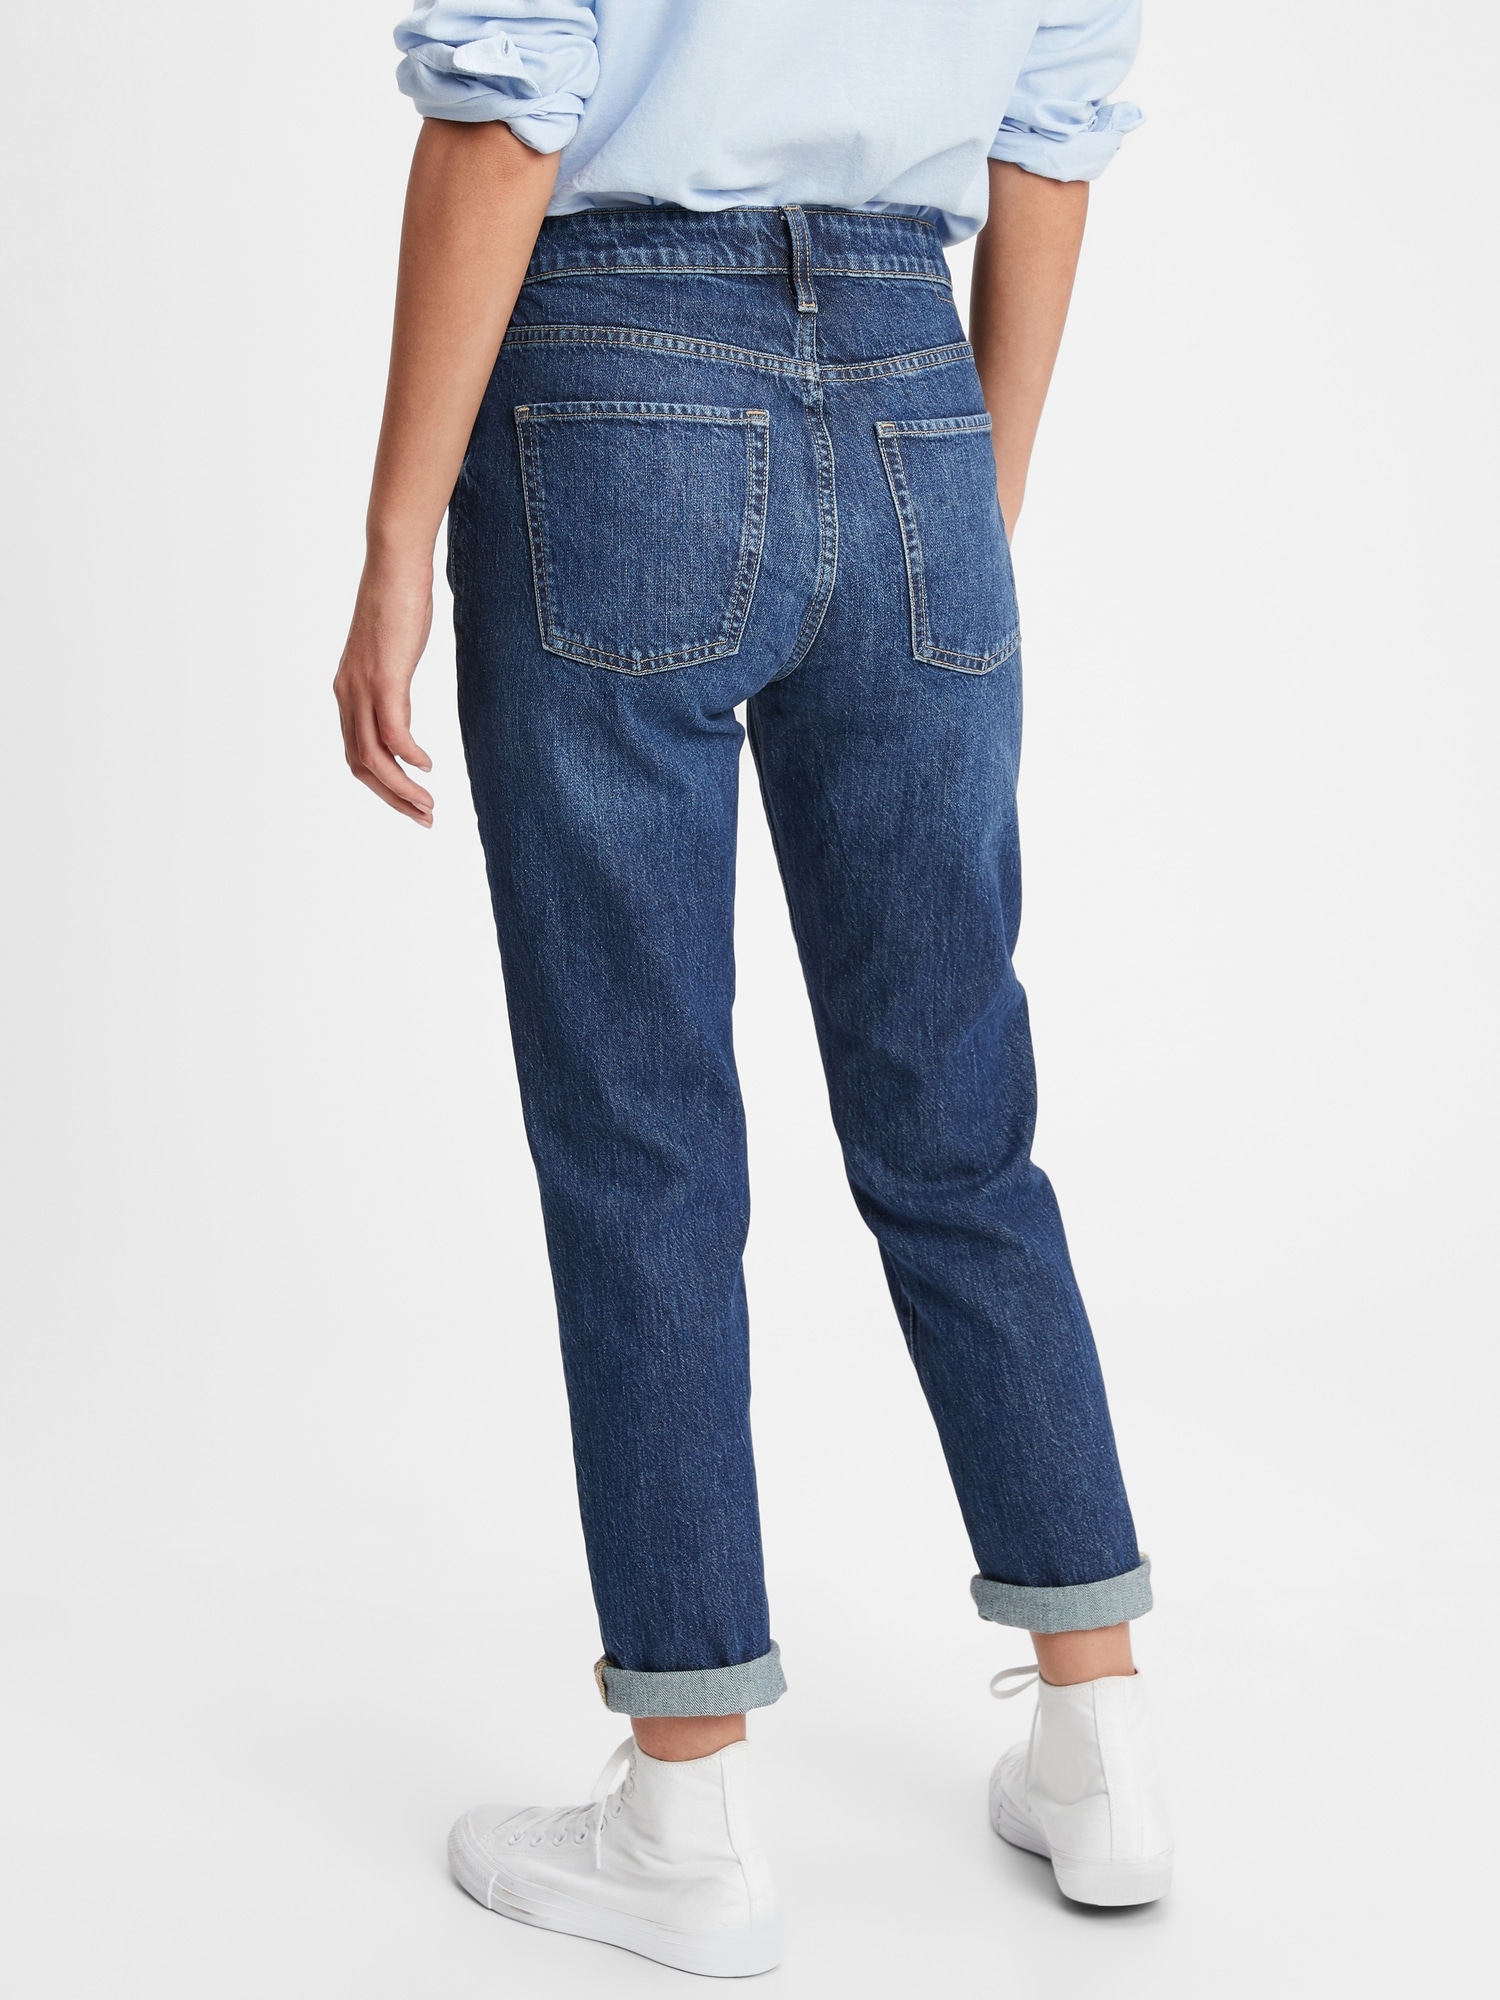 Mid Rise Slim Boyfriend Jeans With Washwell | Gap Factory